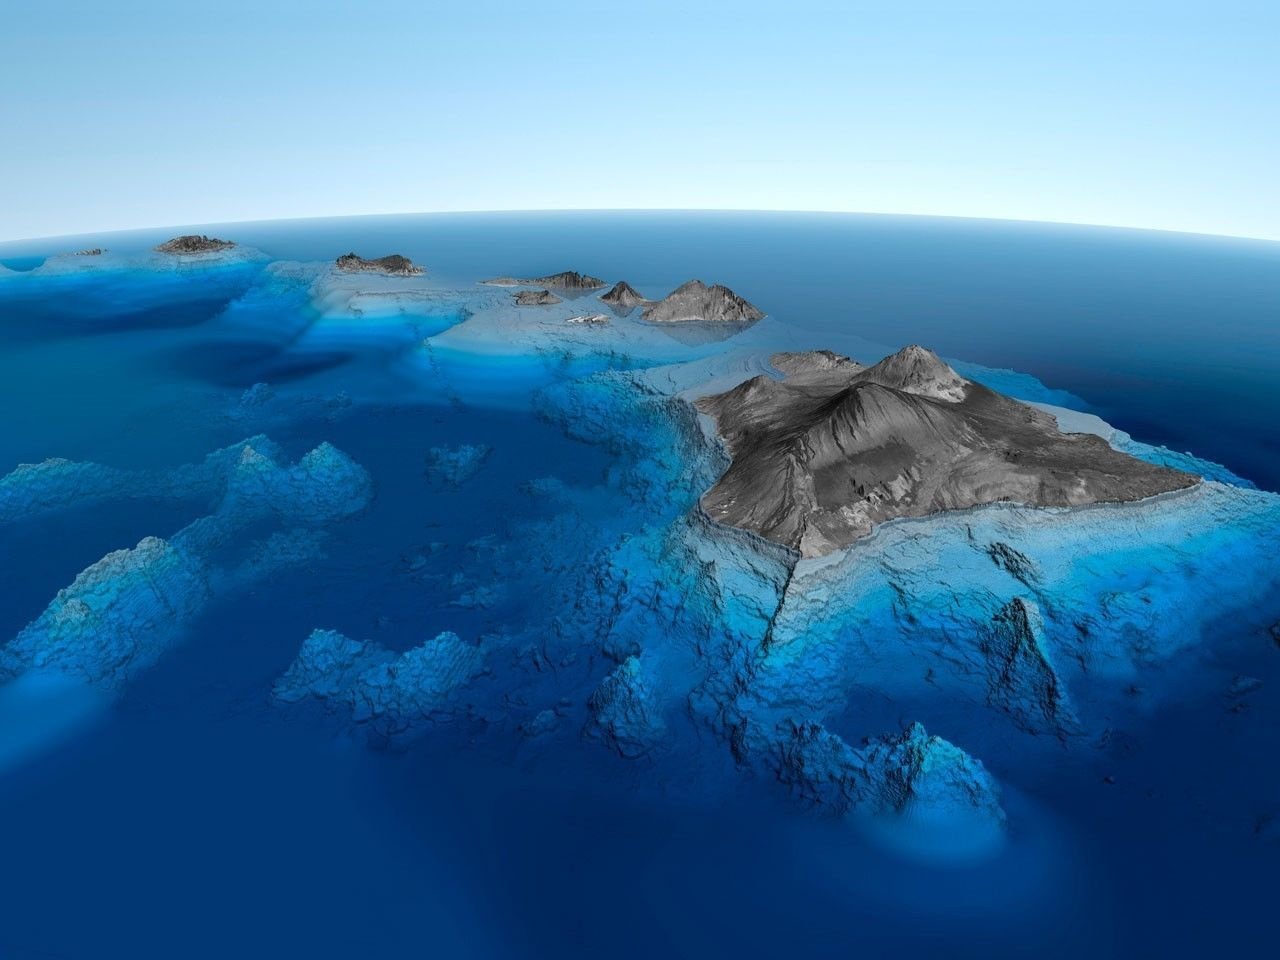 Рельеф на дне океана. Мауна Кеа гора. Мауна-Кеа на Гавайях. Подводная гора Мауна Кеа. Вулкан Мауна Кеа высота.